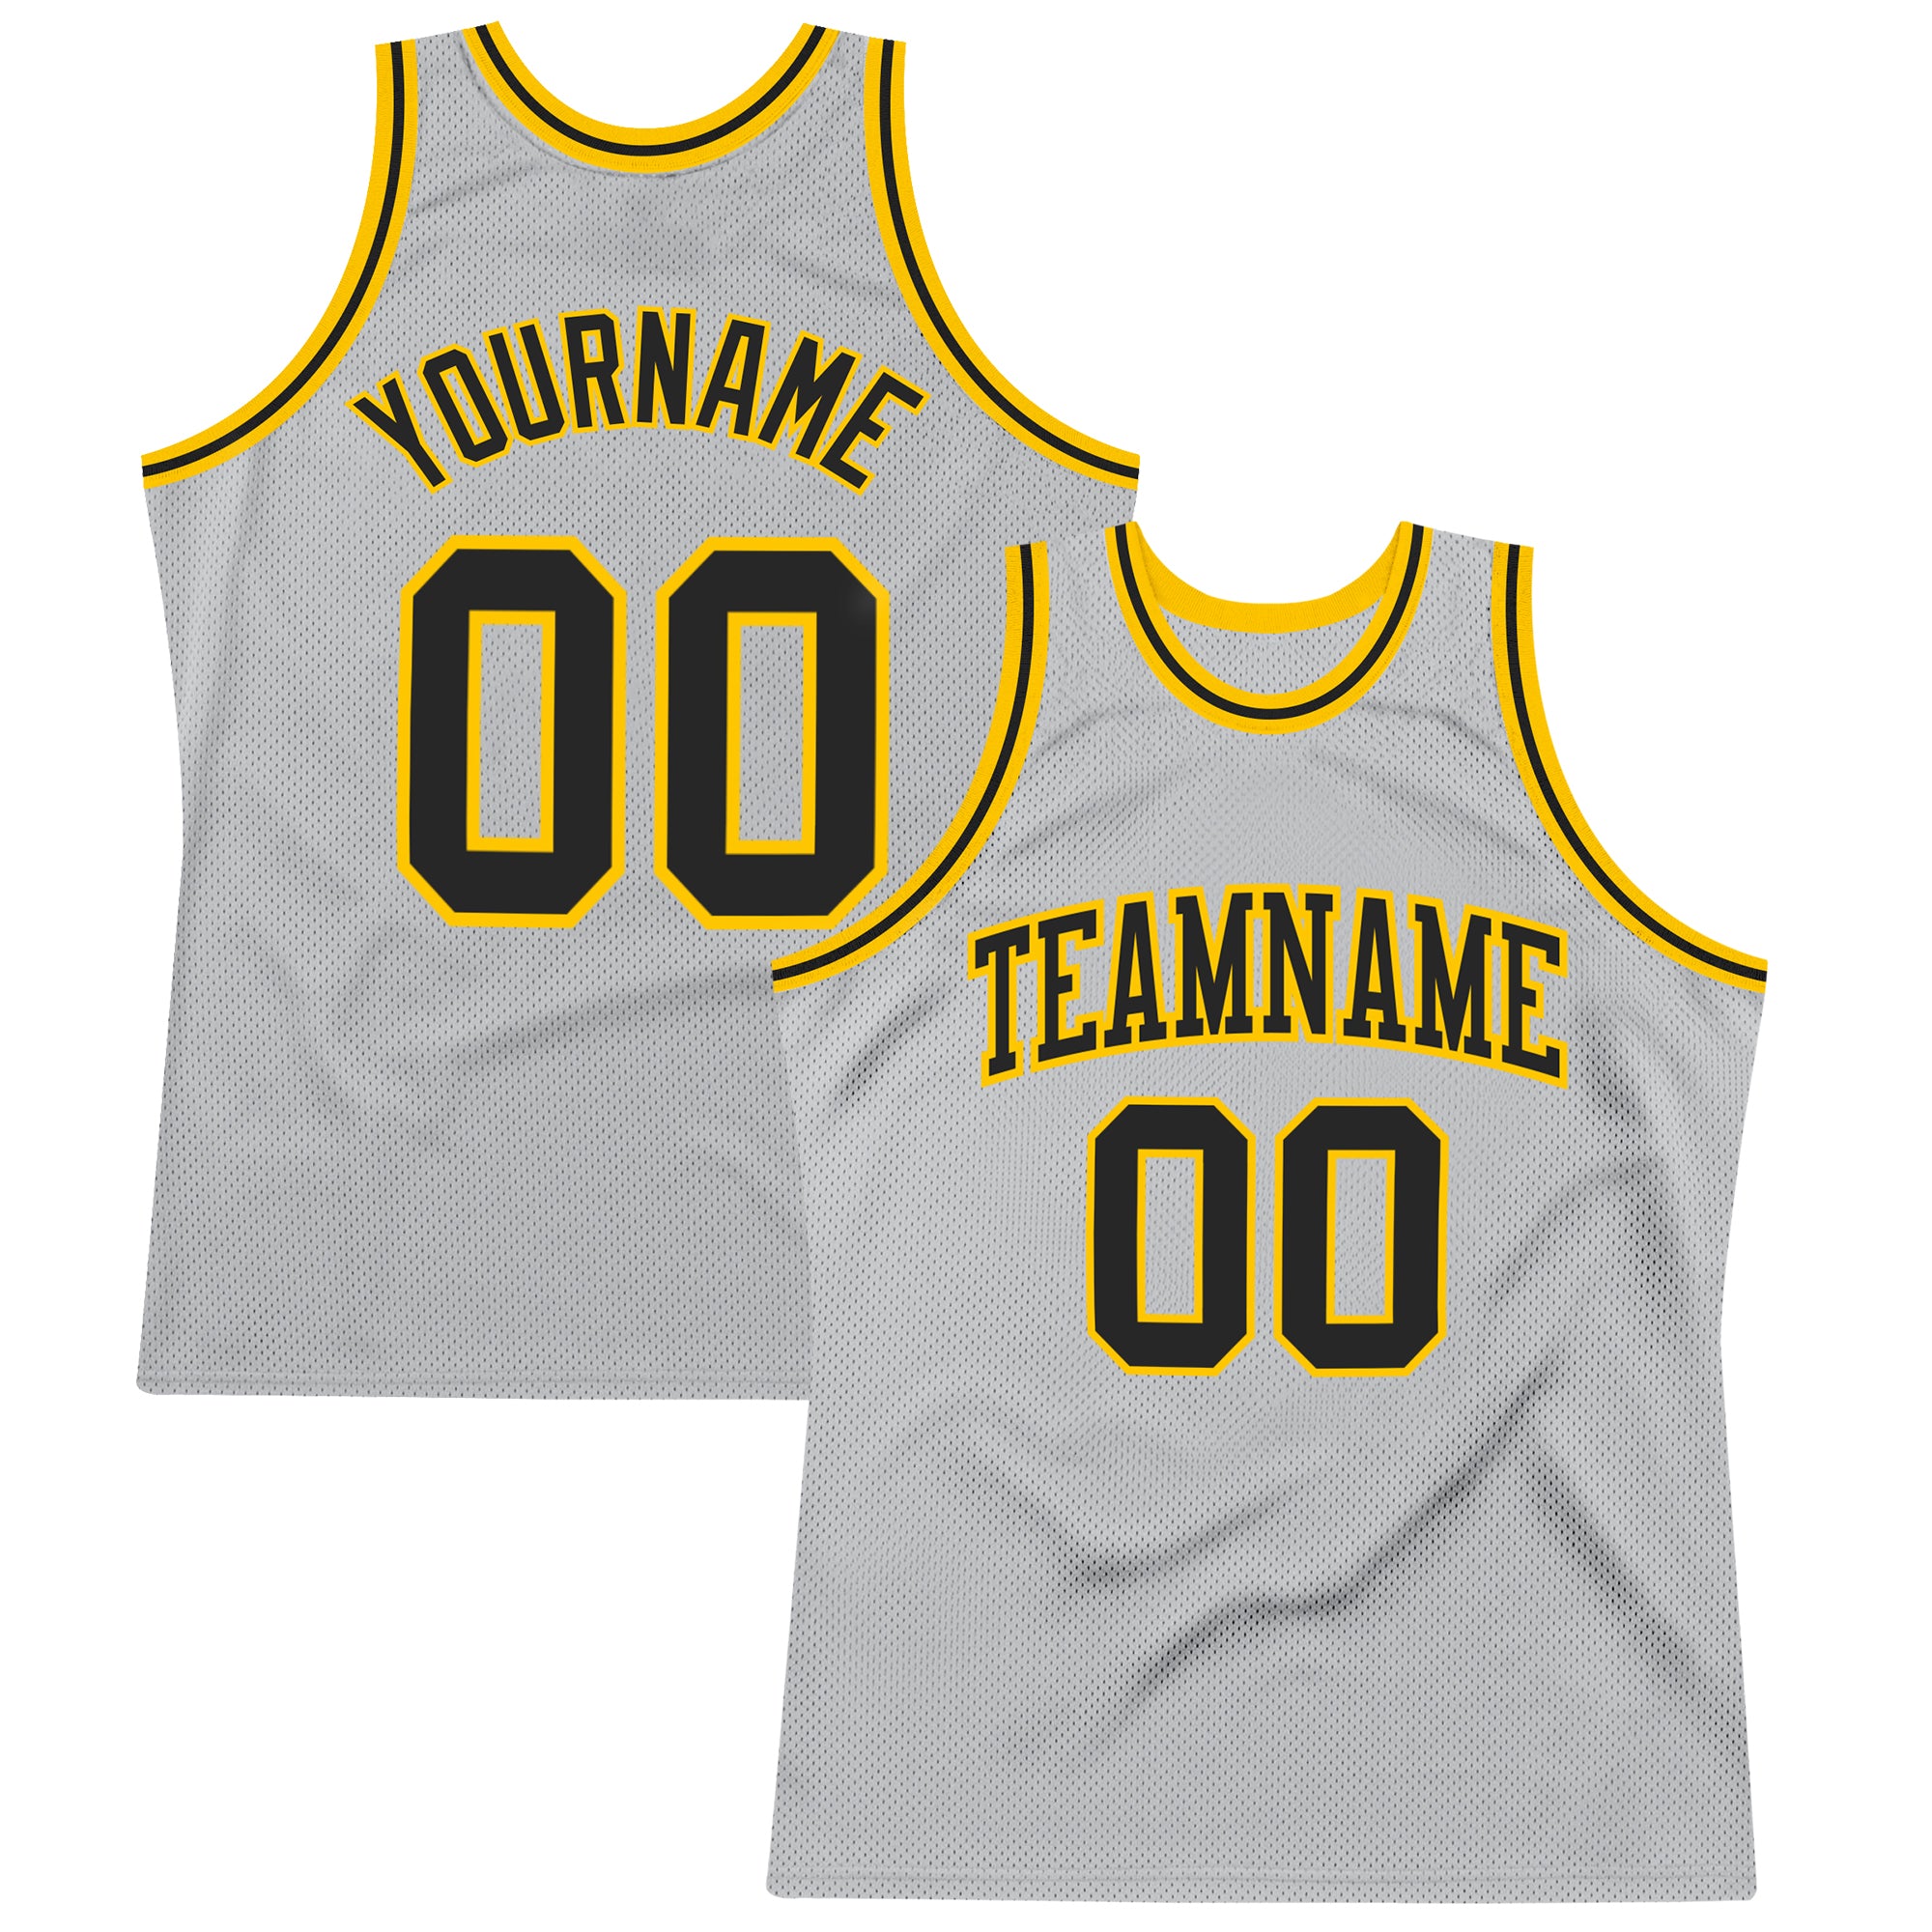 Men's Basketball T-Shirt / Jersey TS900 - Black/Grey/Gold